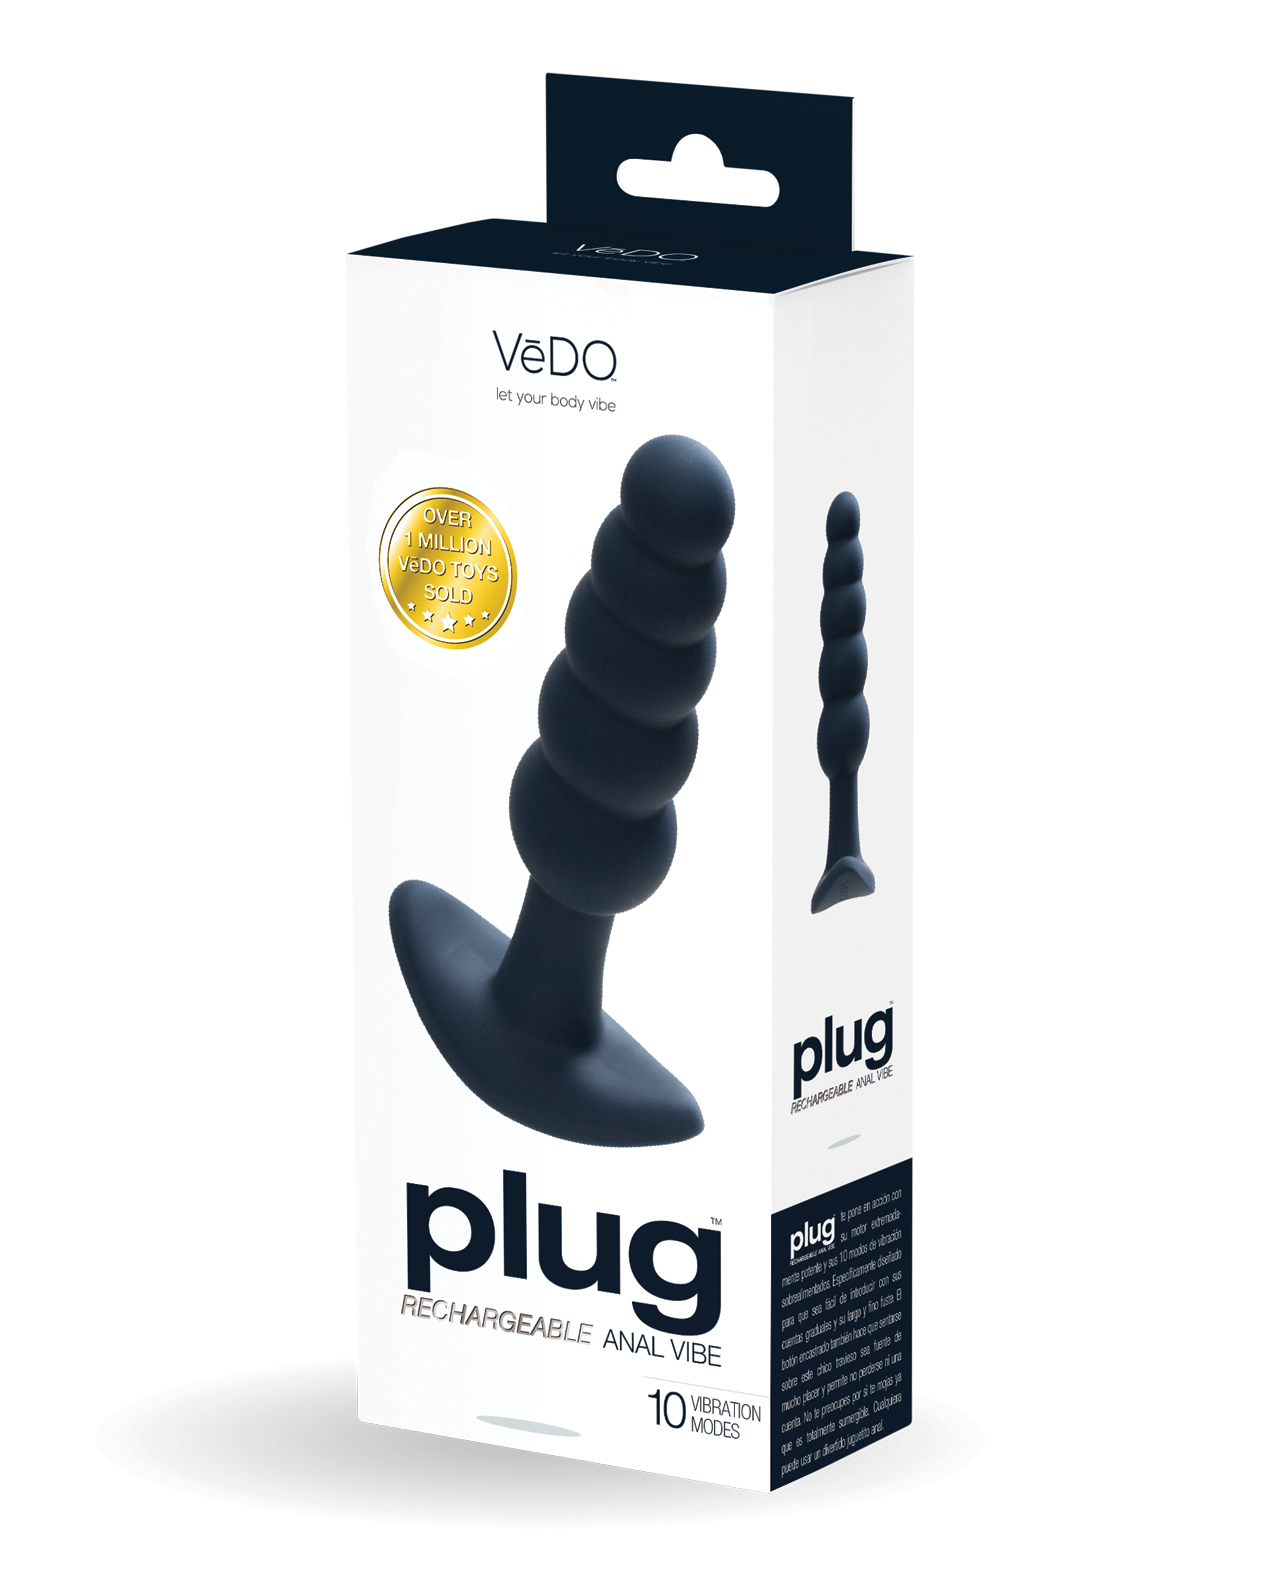 Black butt plug on a white box